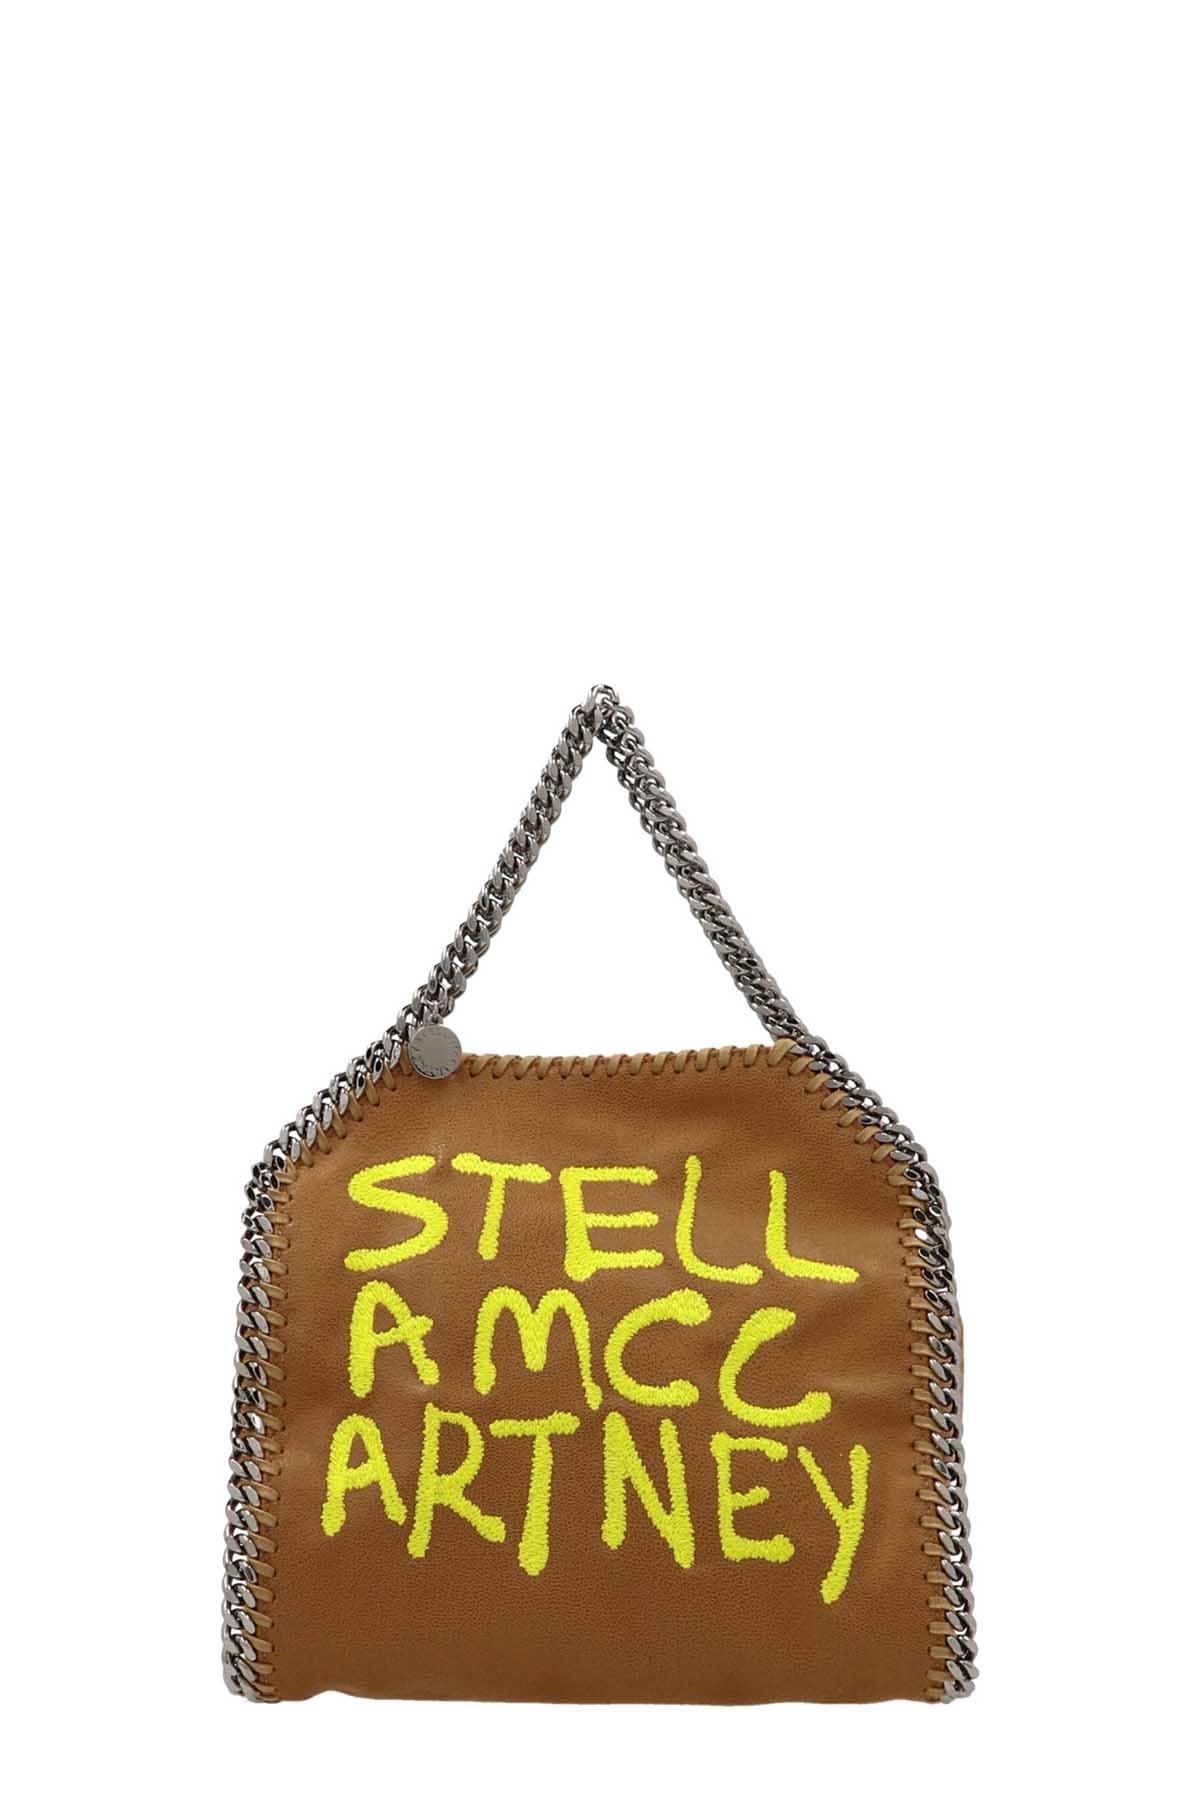 STELLA MCCARTNEY 'Falabella' Mini Capsule Shared 3.0 Handbag